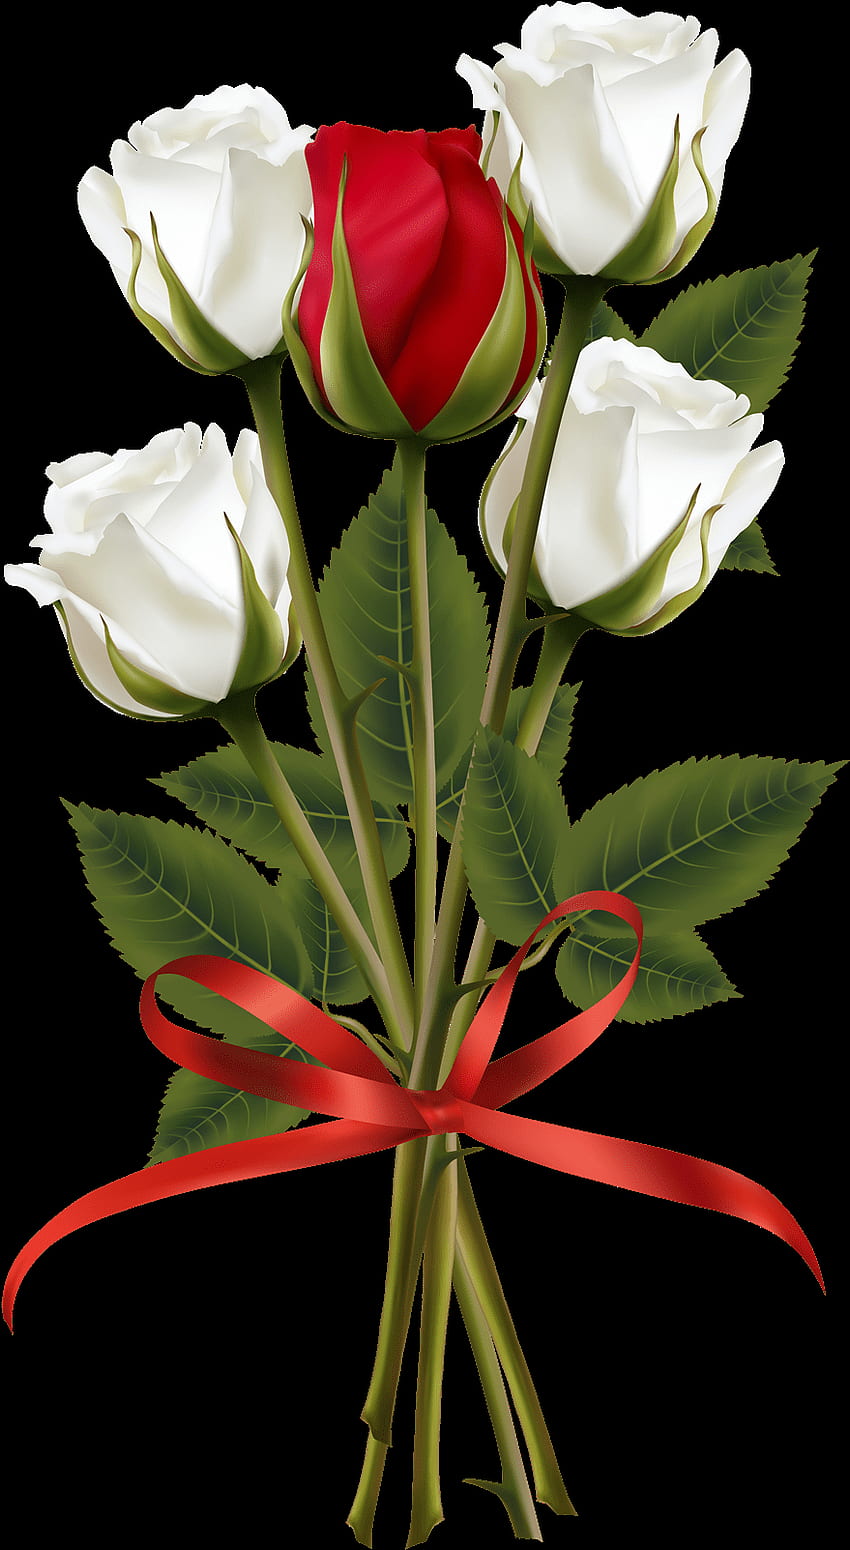 Marco de flores, arte floral, rosas blancas, rosas rojas, rojas - prediseñadas de rosas rojas y blancas PNG transparentes fondo de pantalla del teléfono